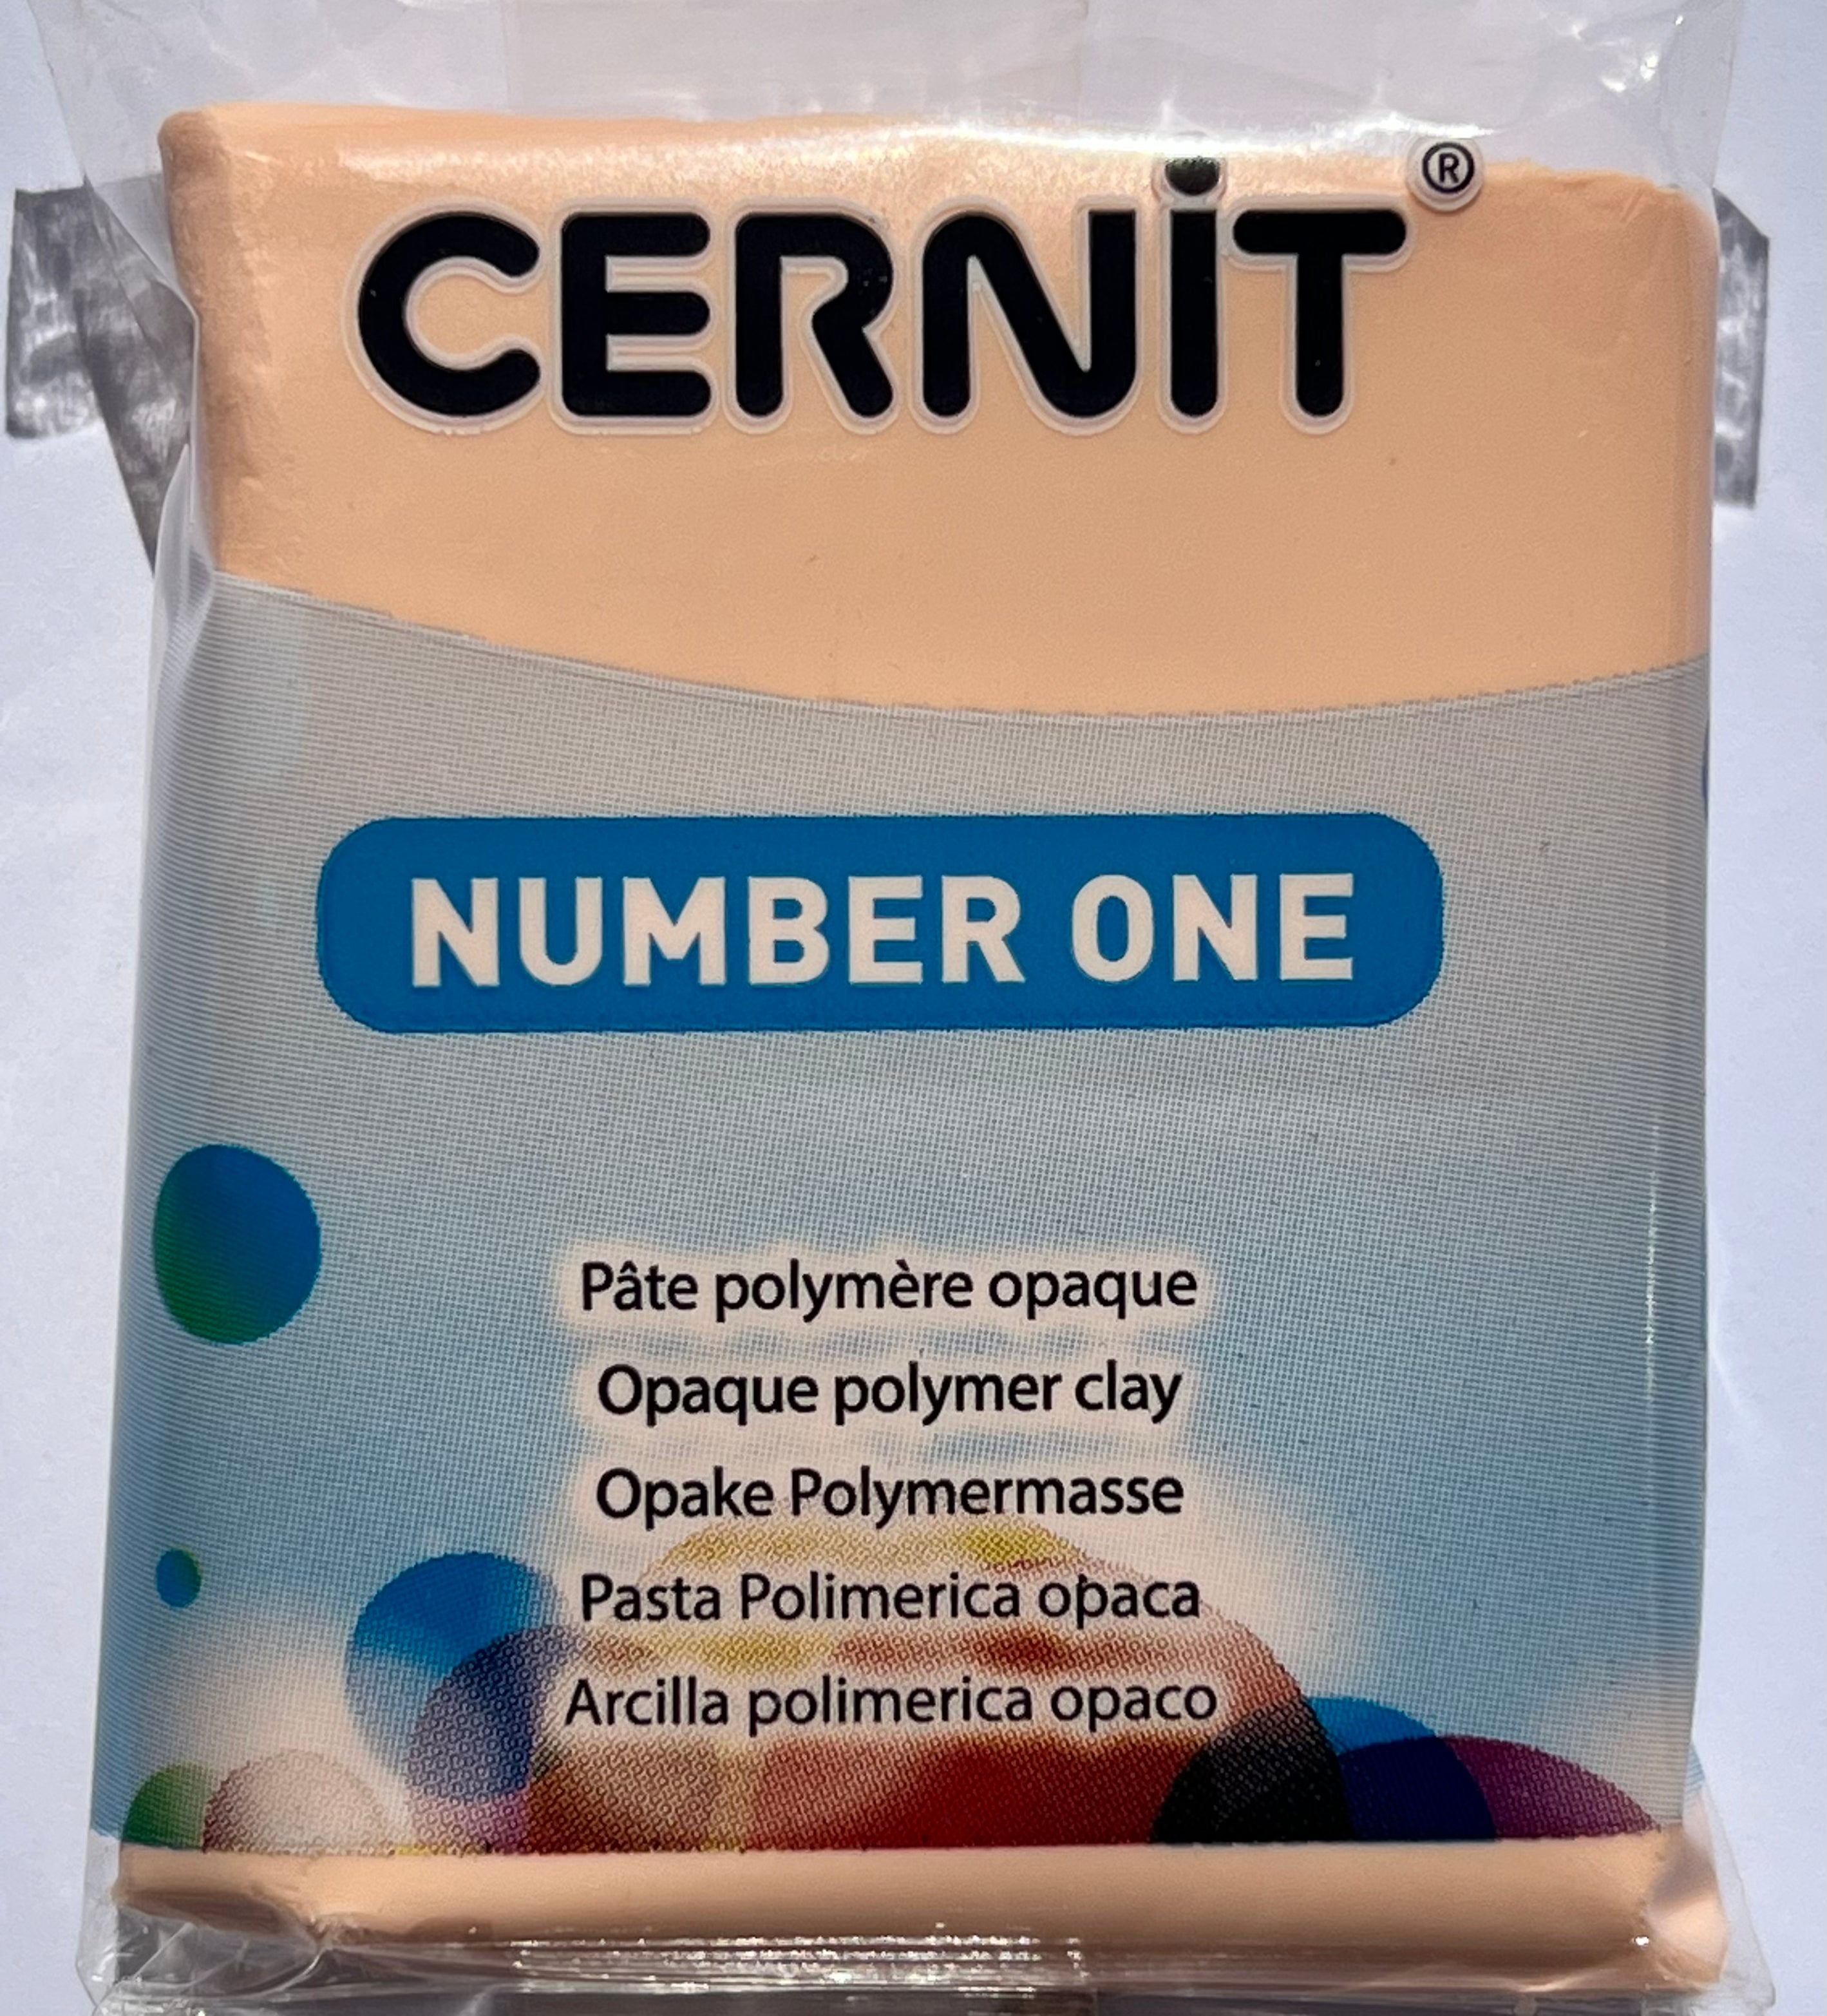 Pâte polymère Cernit Number One